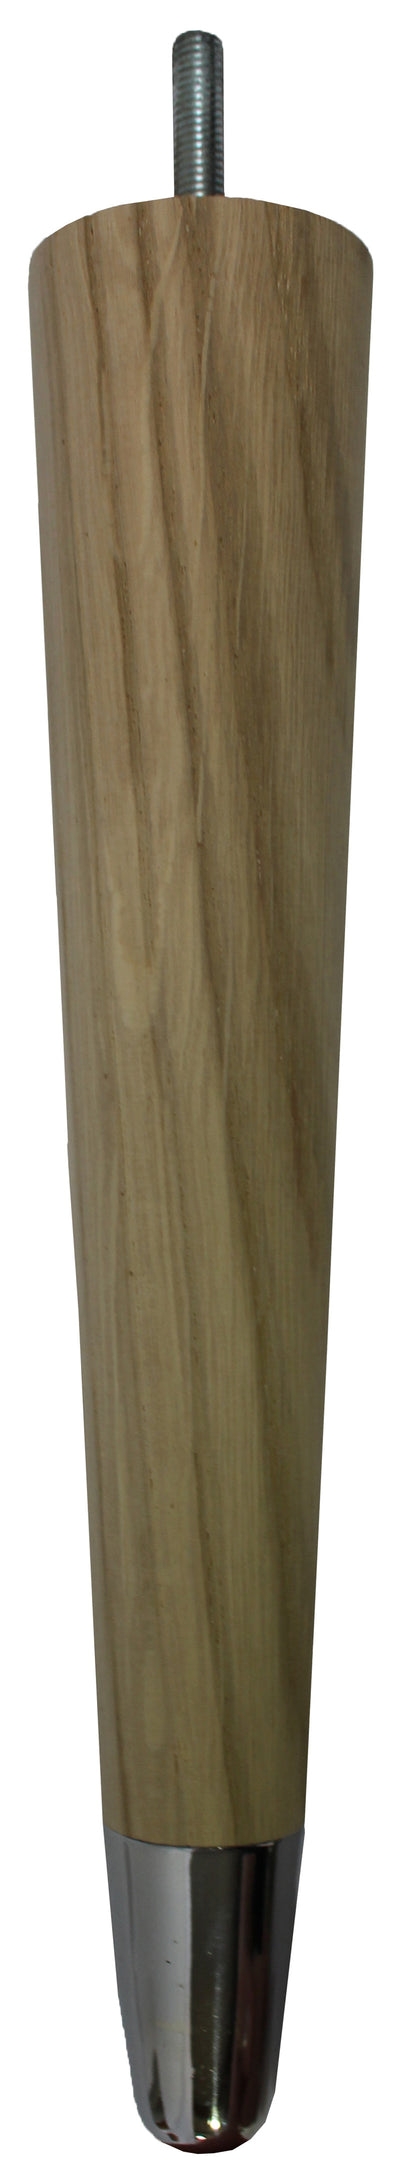 Liva Solid Oak Tapered Furniture Legs - Raw Finish - Chrome Slipper Cups - Set of 4